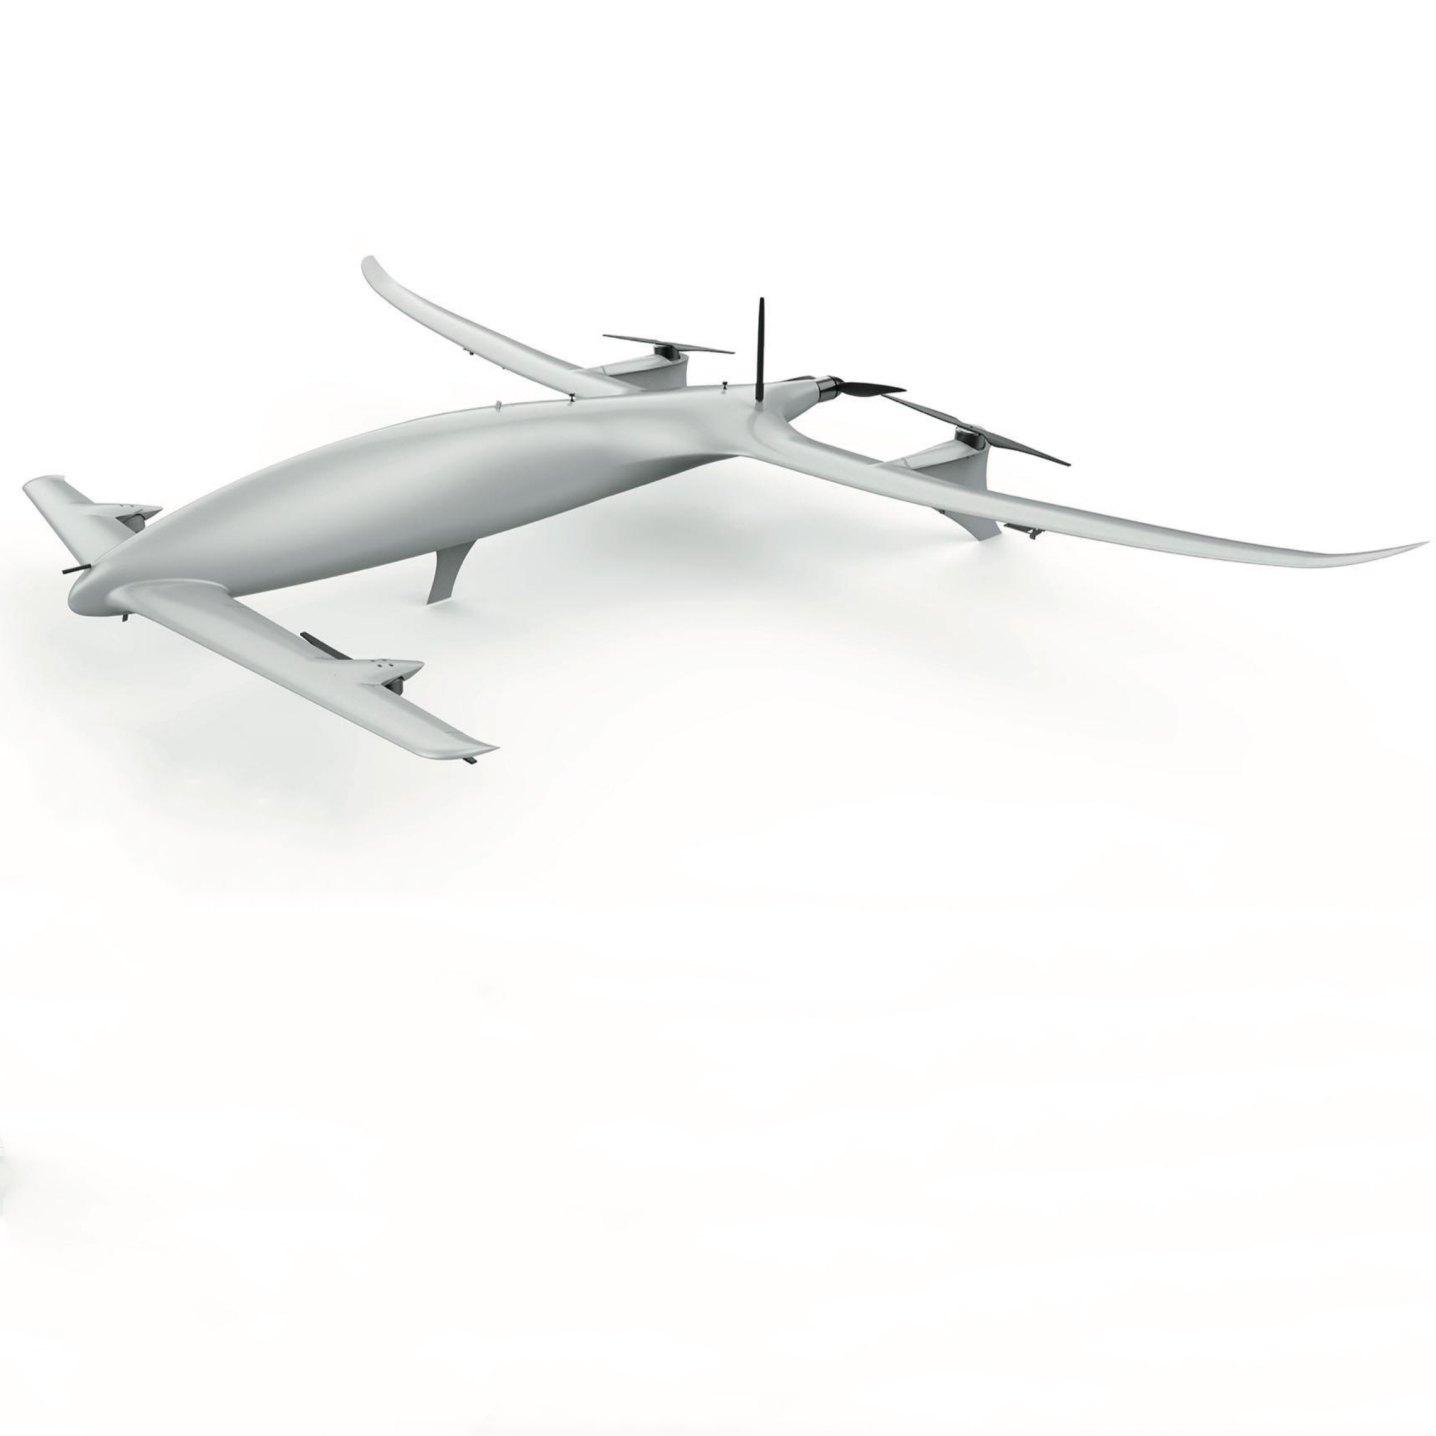 Swans VTOL UAV - Unmanned RC